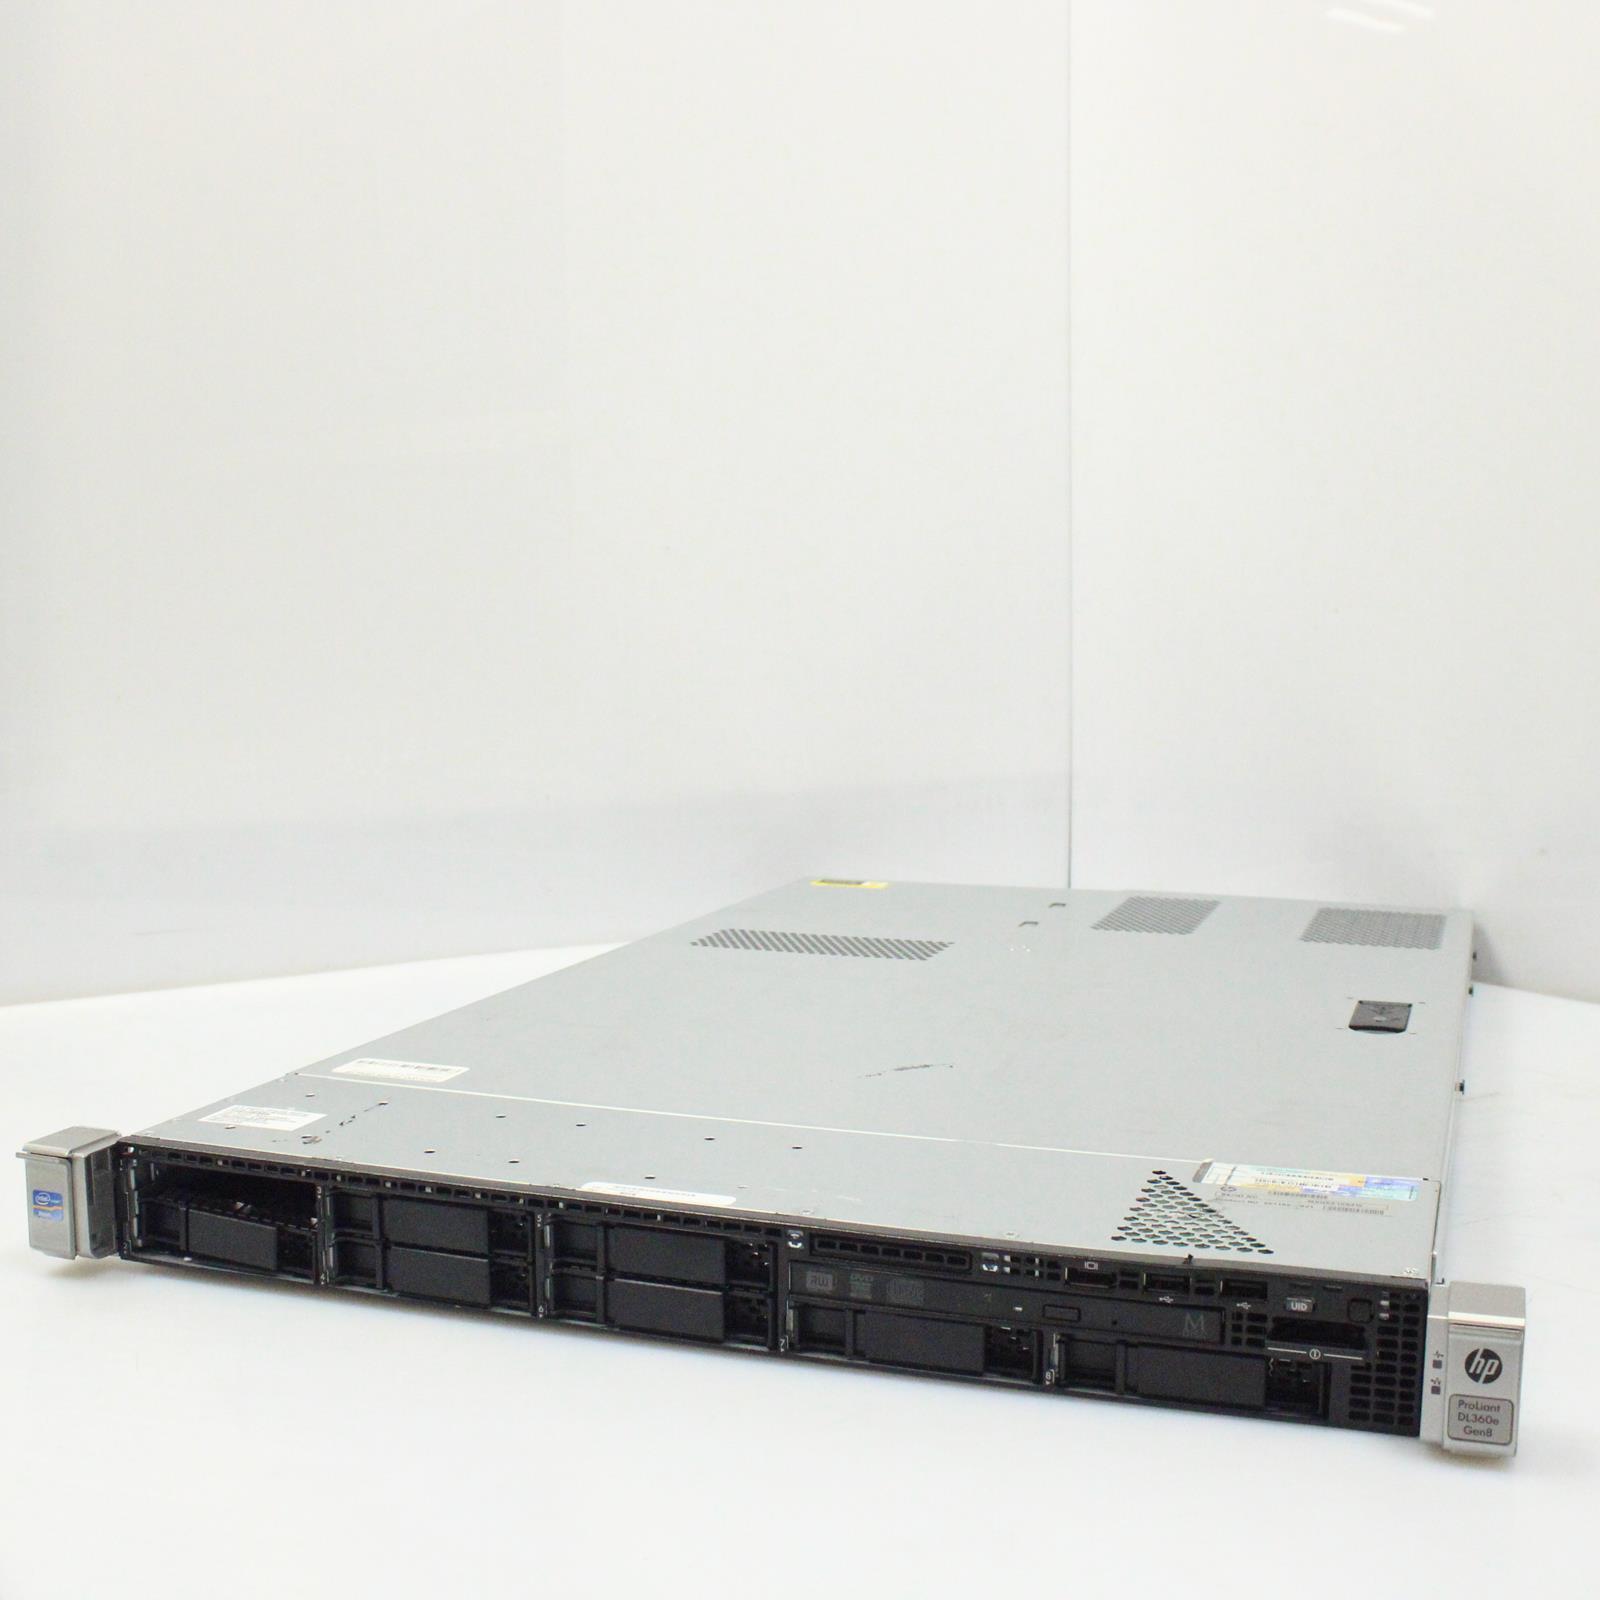 EMC KYBFP 2x INTEL XEON E5-2658 256GB RAM 22TB HDDs TrueNAS Scale Server